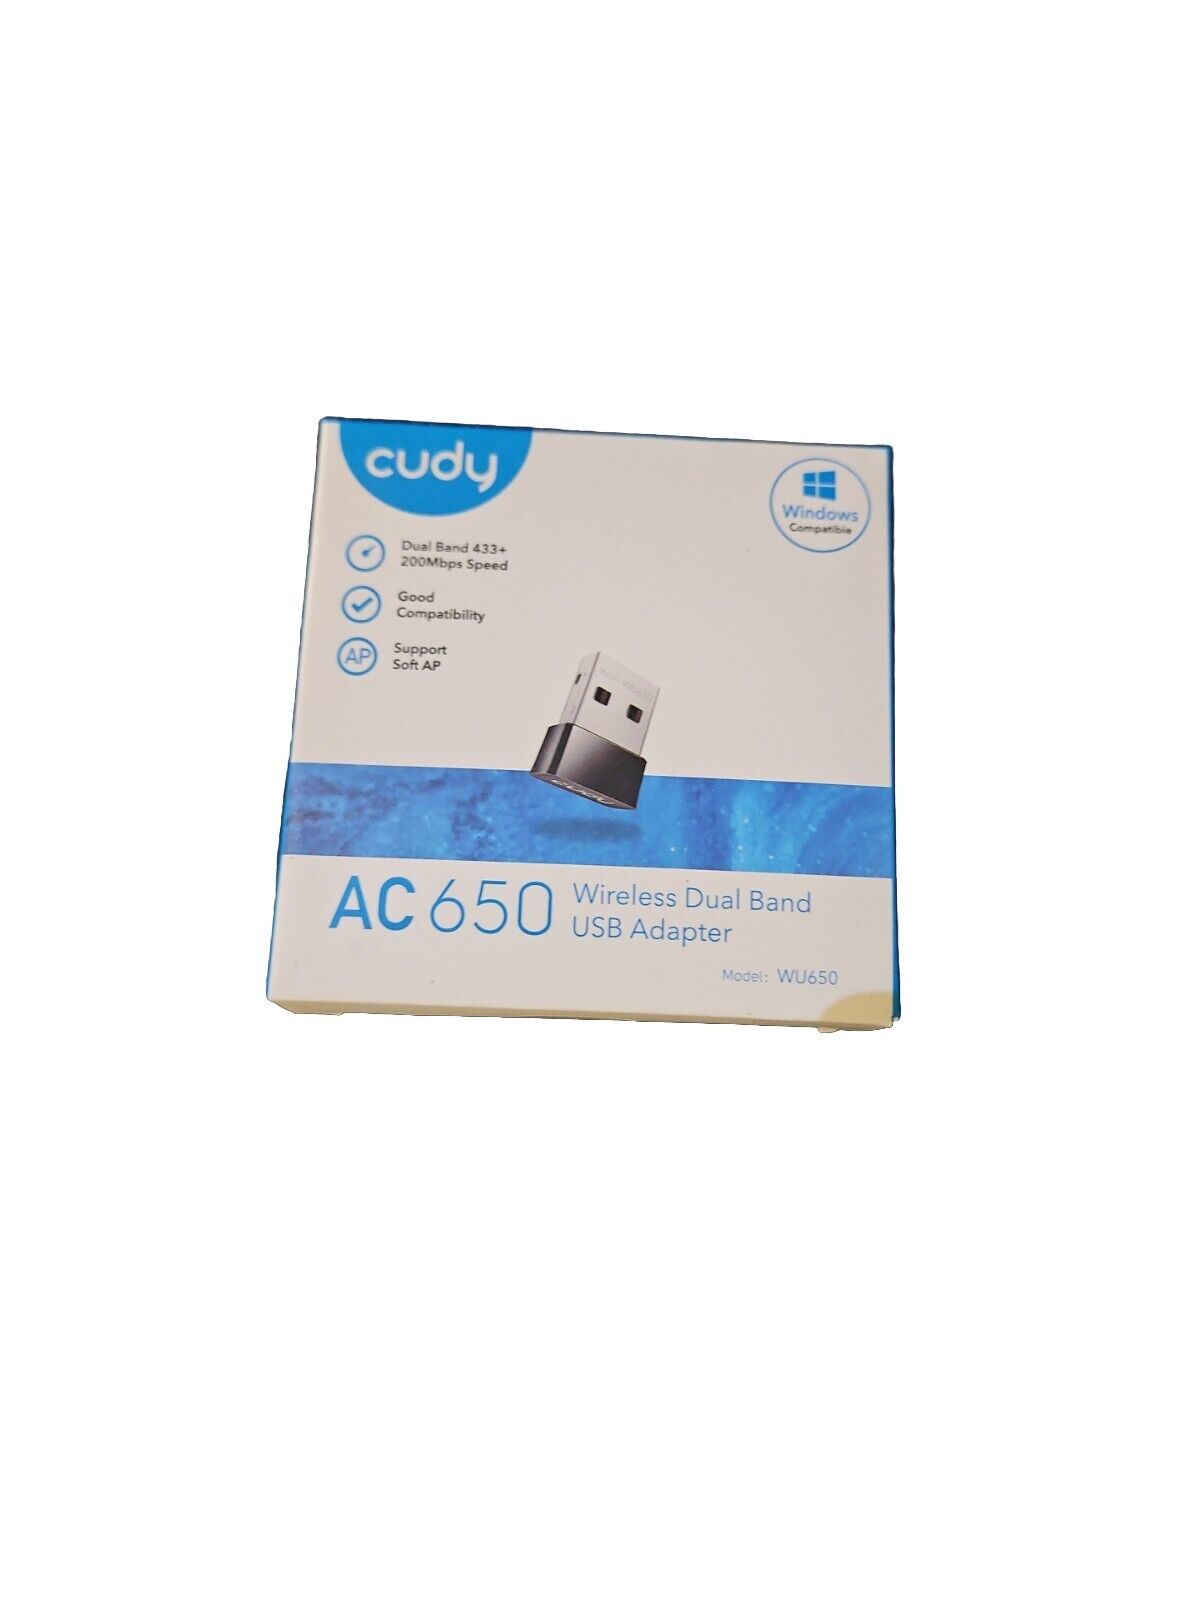 Cudy Wireless Dual Band USB Adapter Dongle AC650 Speed 433/200 Mbps Nano Size